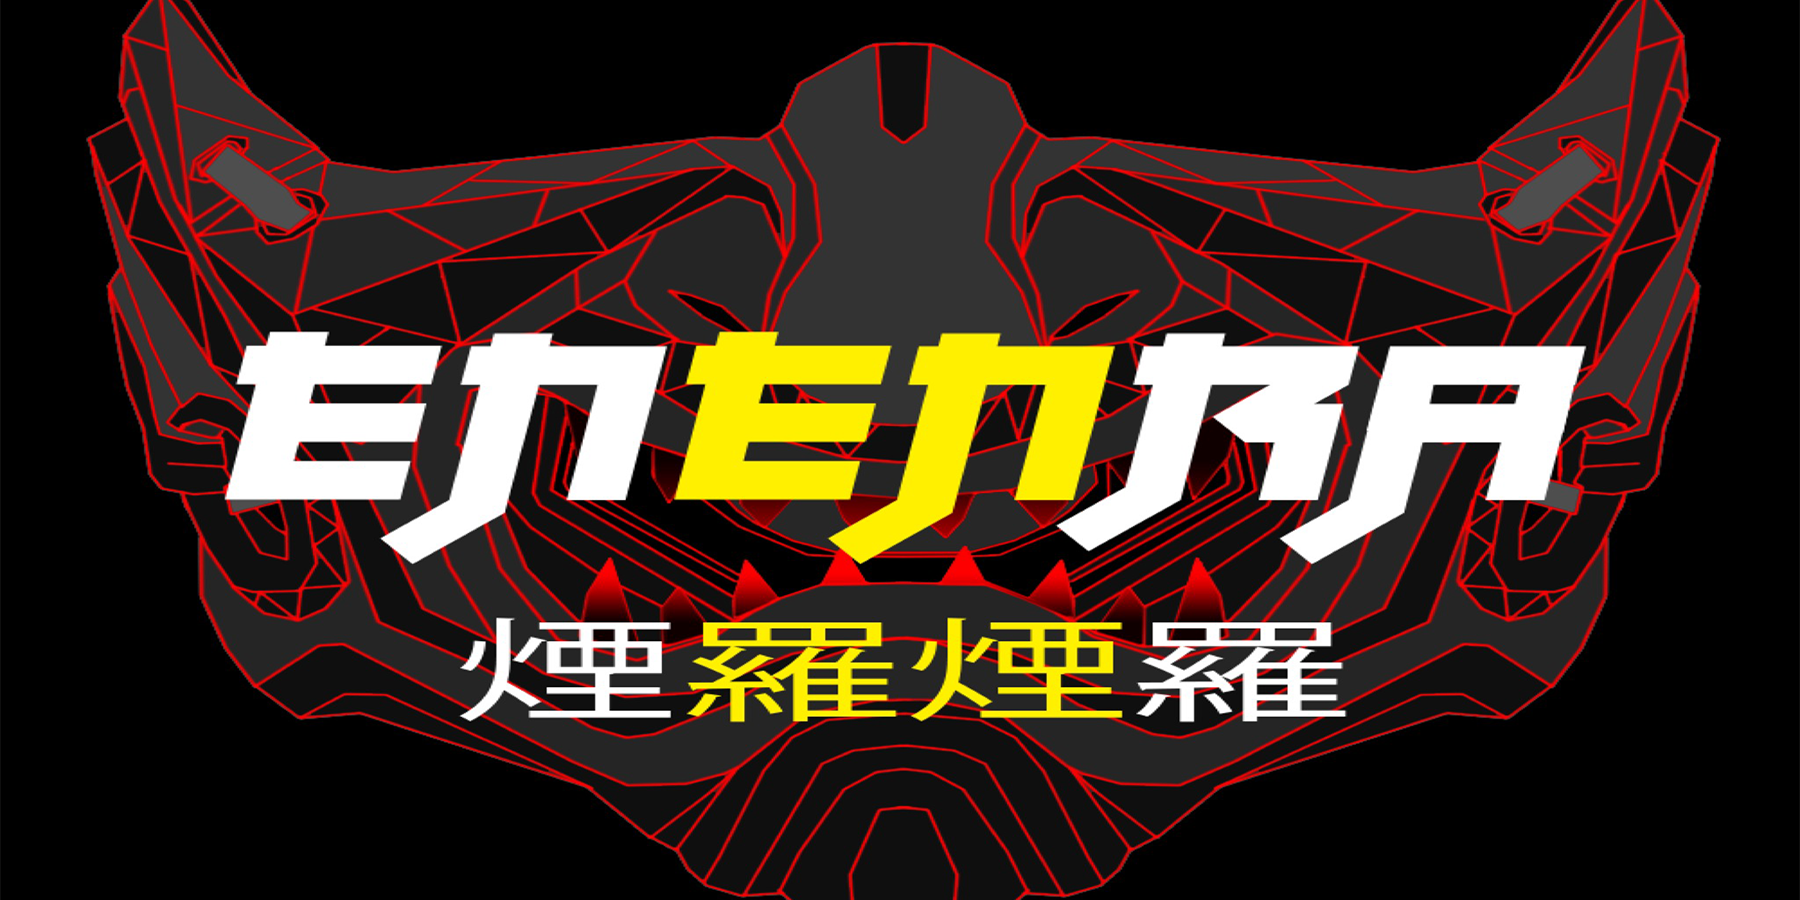 enenra-logo-kiʻi-8357215